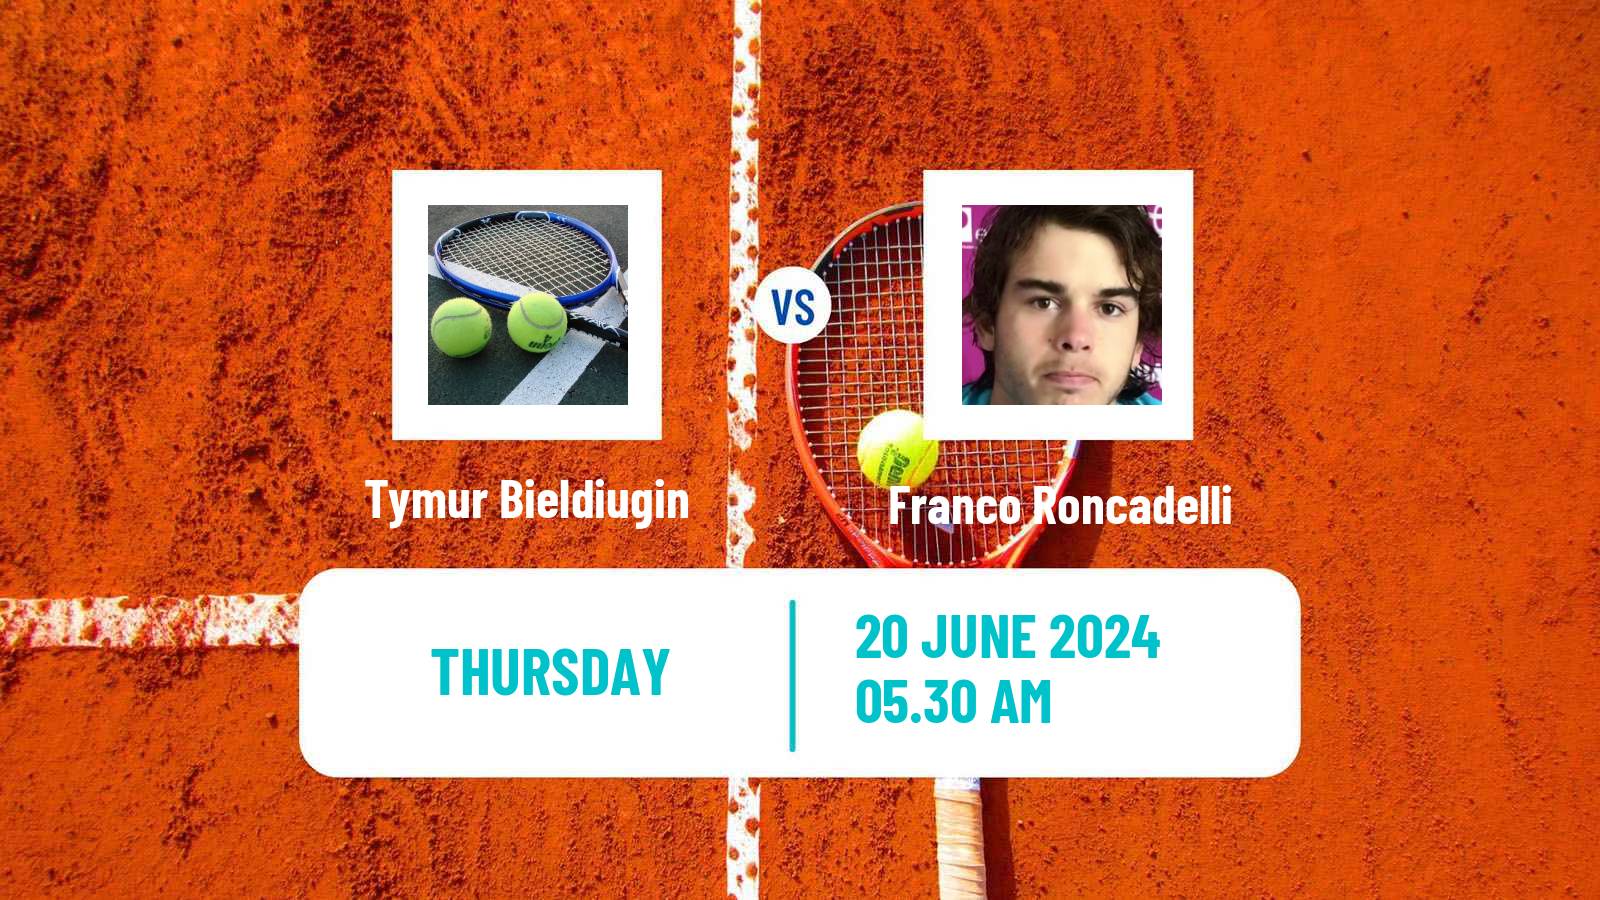 Tennis ITF M15 Nyiregyhaza 2 Men Tymur Bieldiugin - Franco Roncadelli